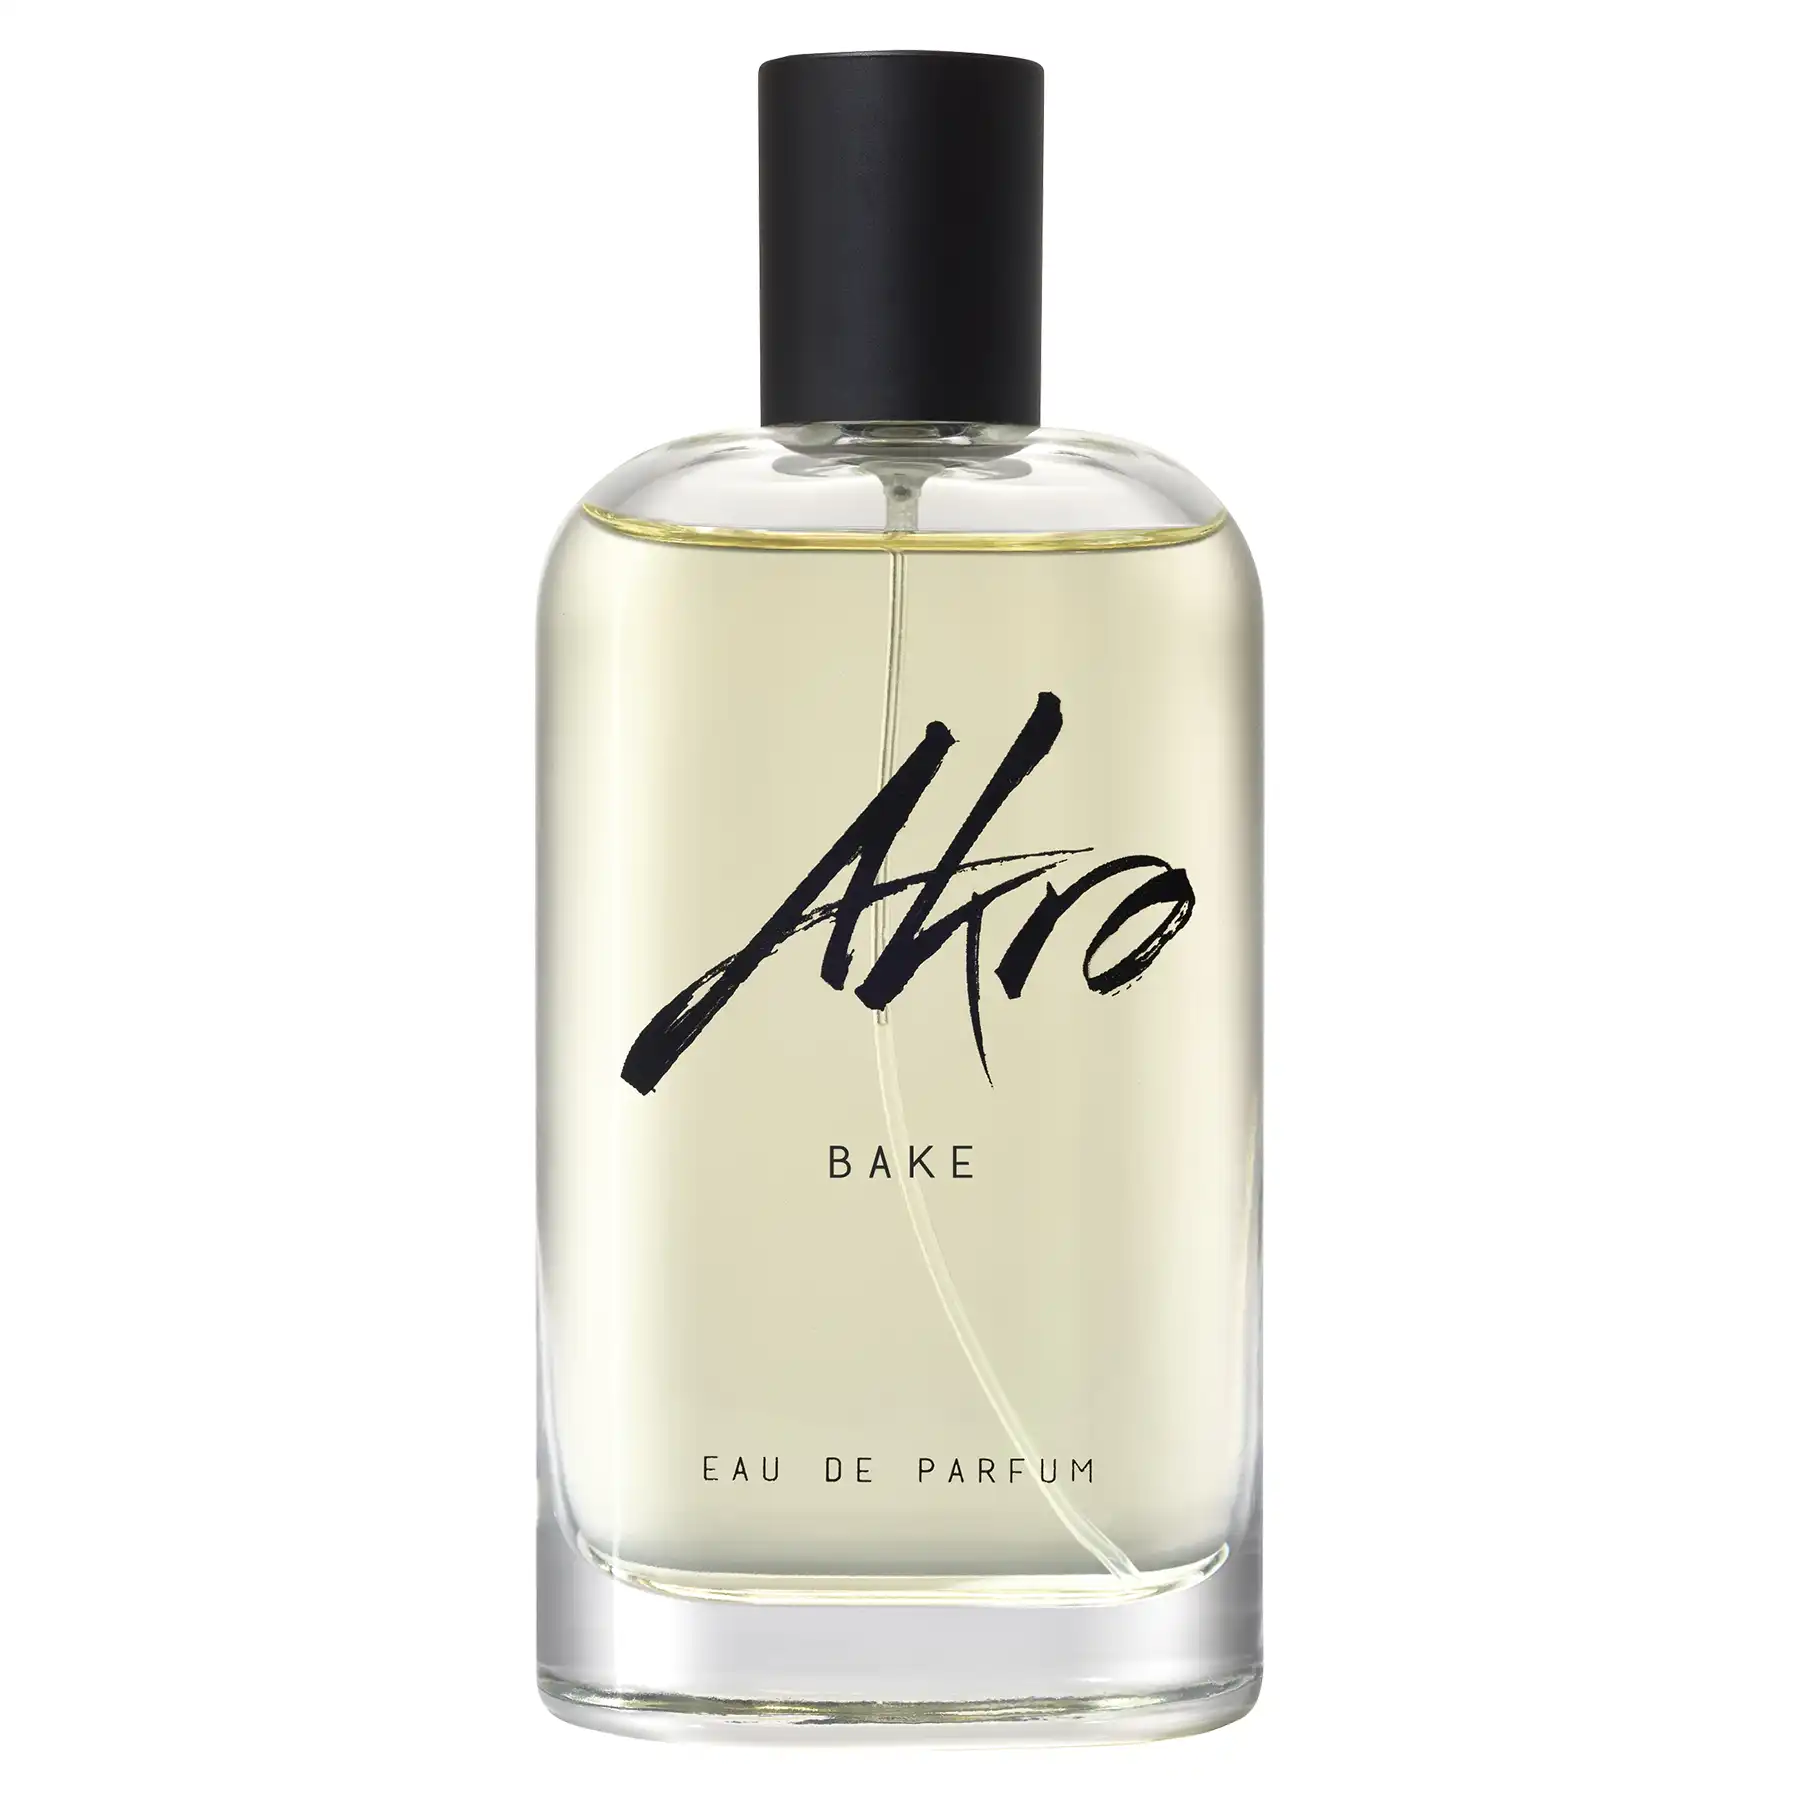 Akro BAKE Eau de Parfum 100ml